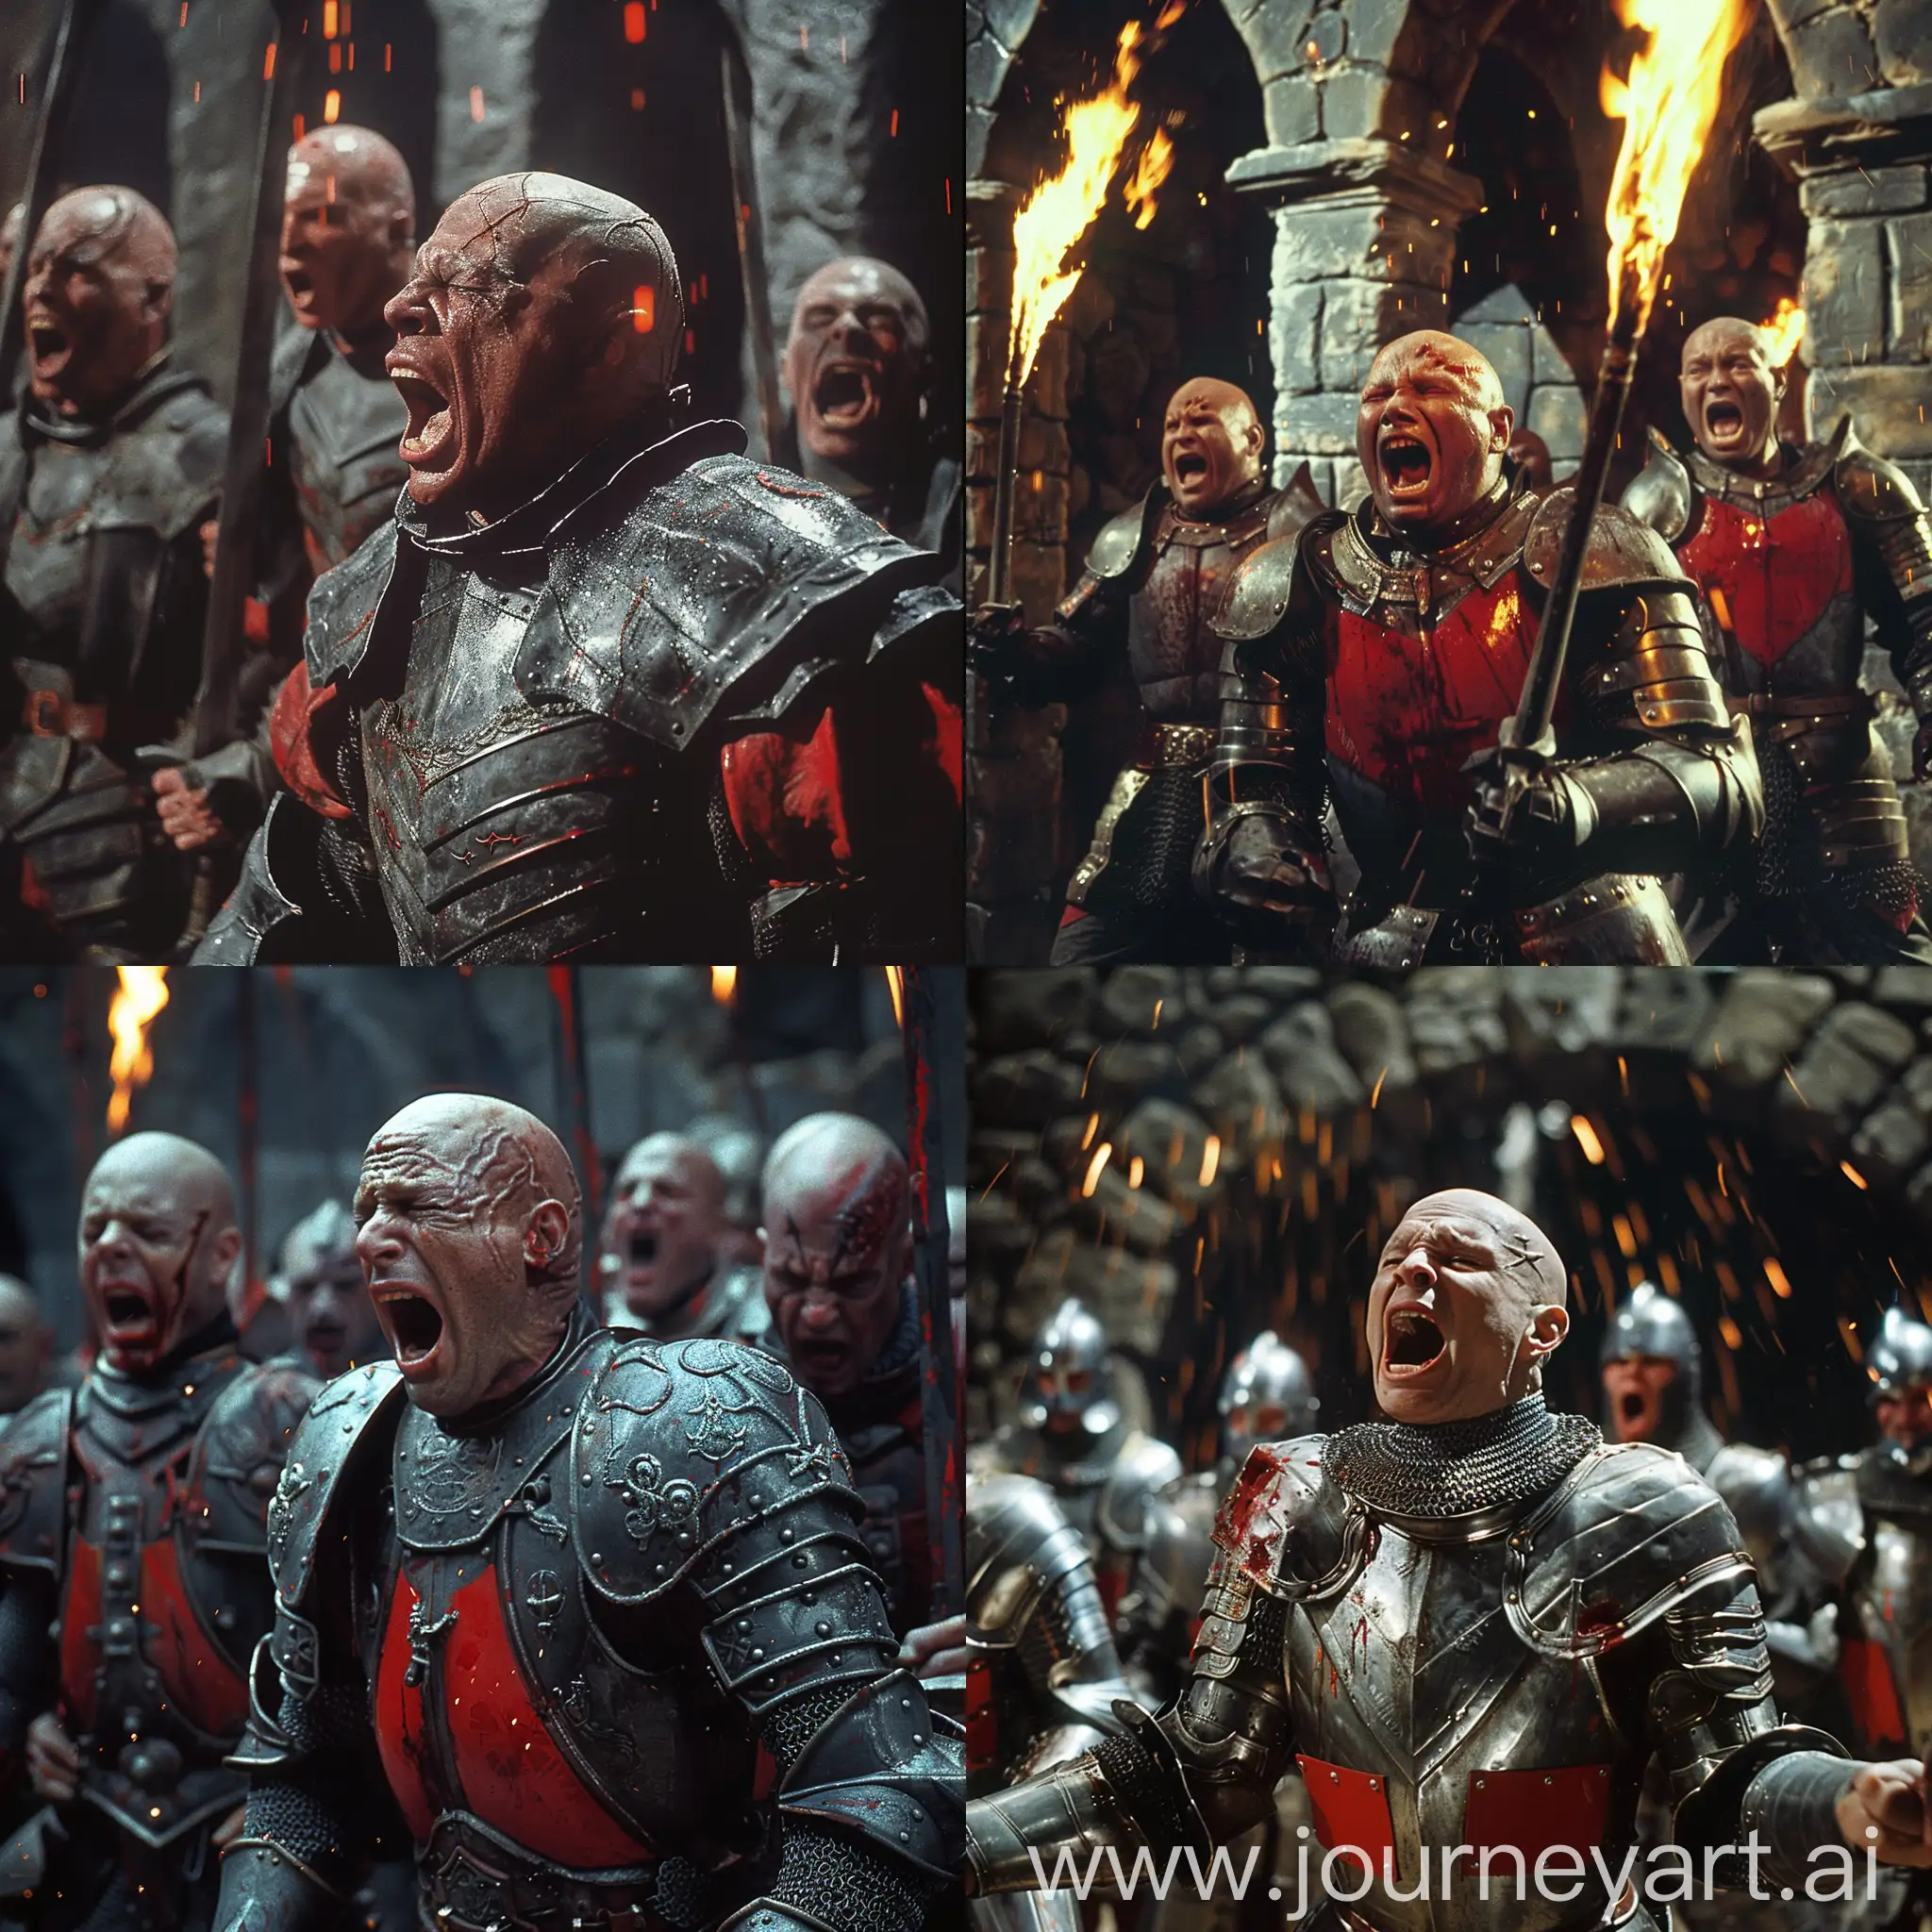 Dark-Fantasy-Scene-Evil-Bald-Knights-in-Armor-Amidst-Fiery-Dungeons